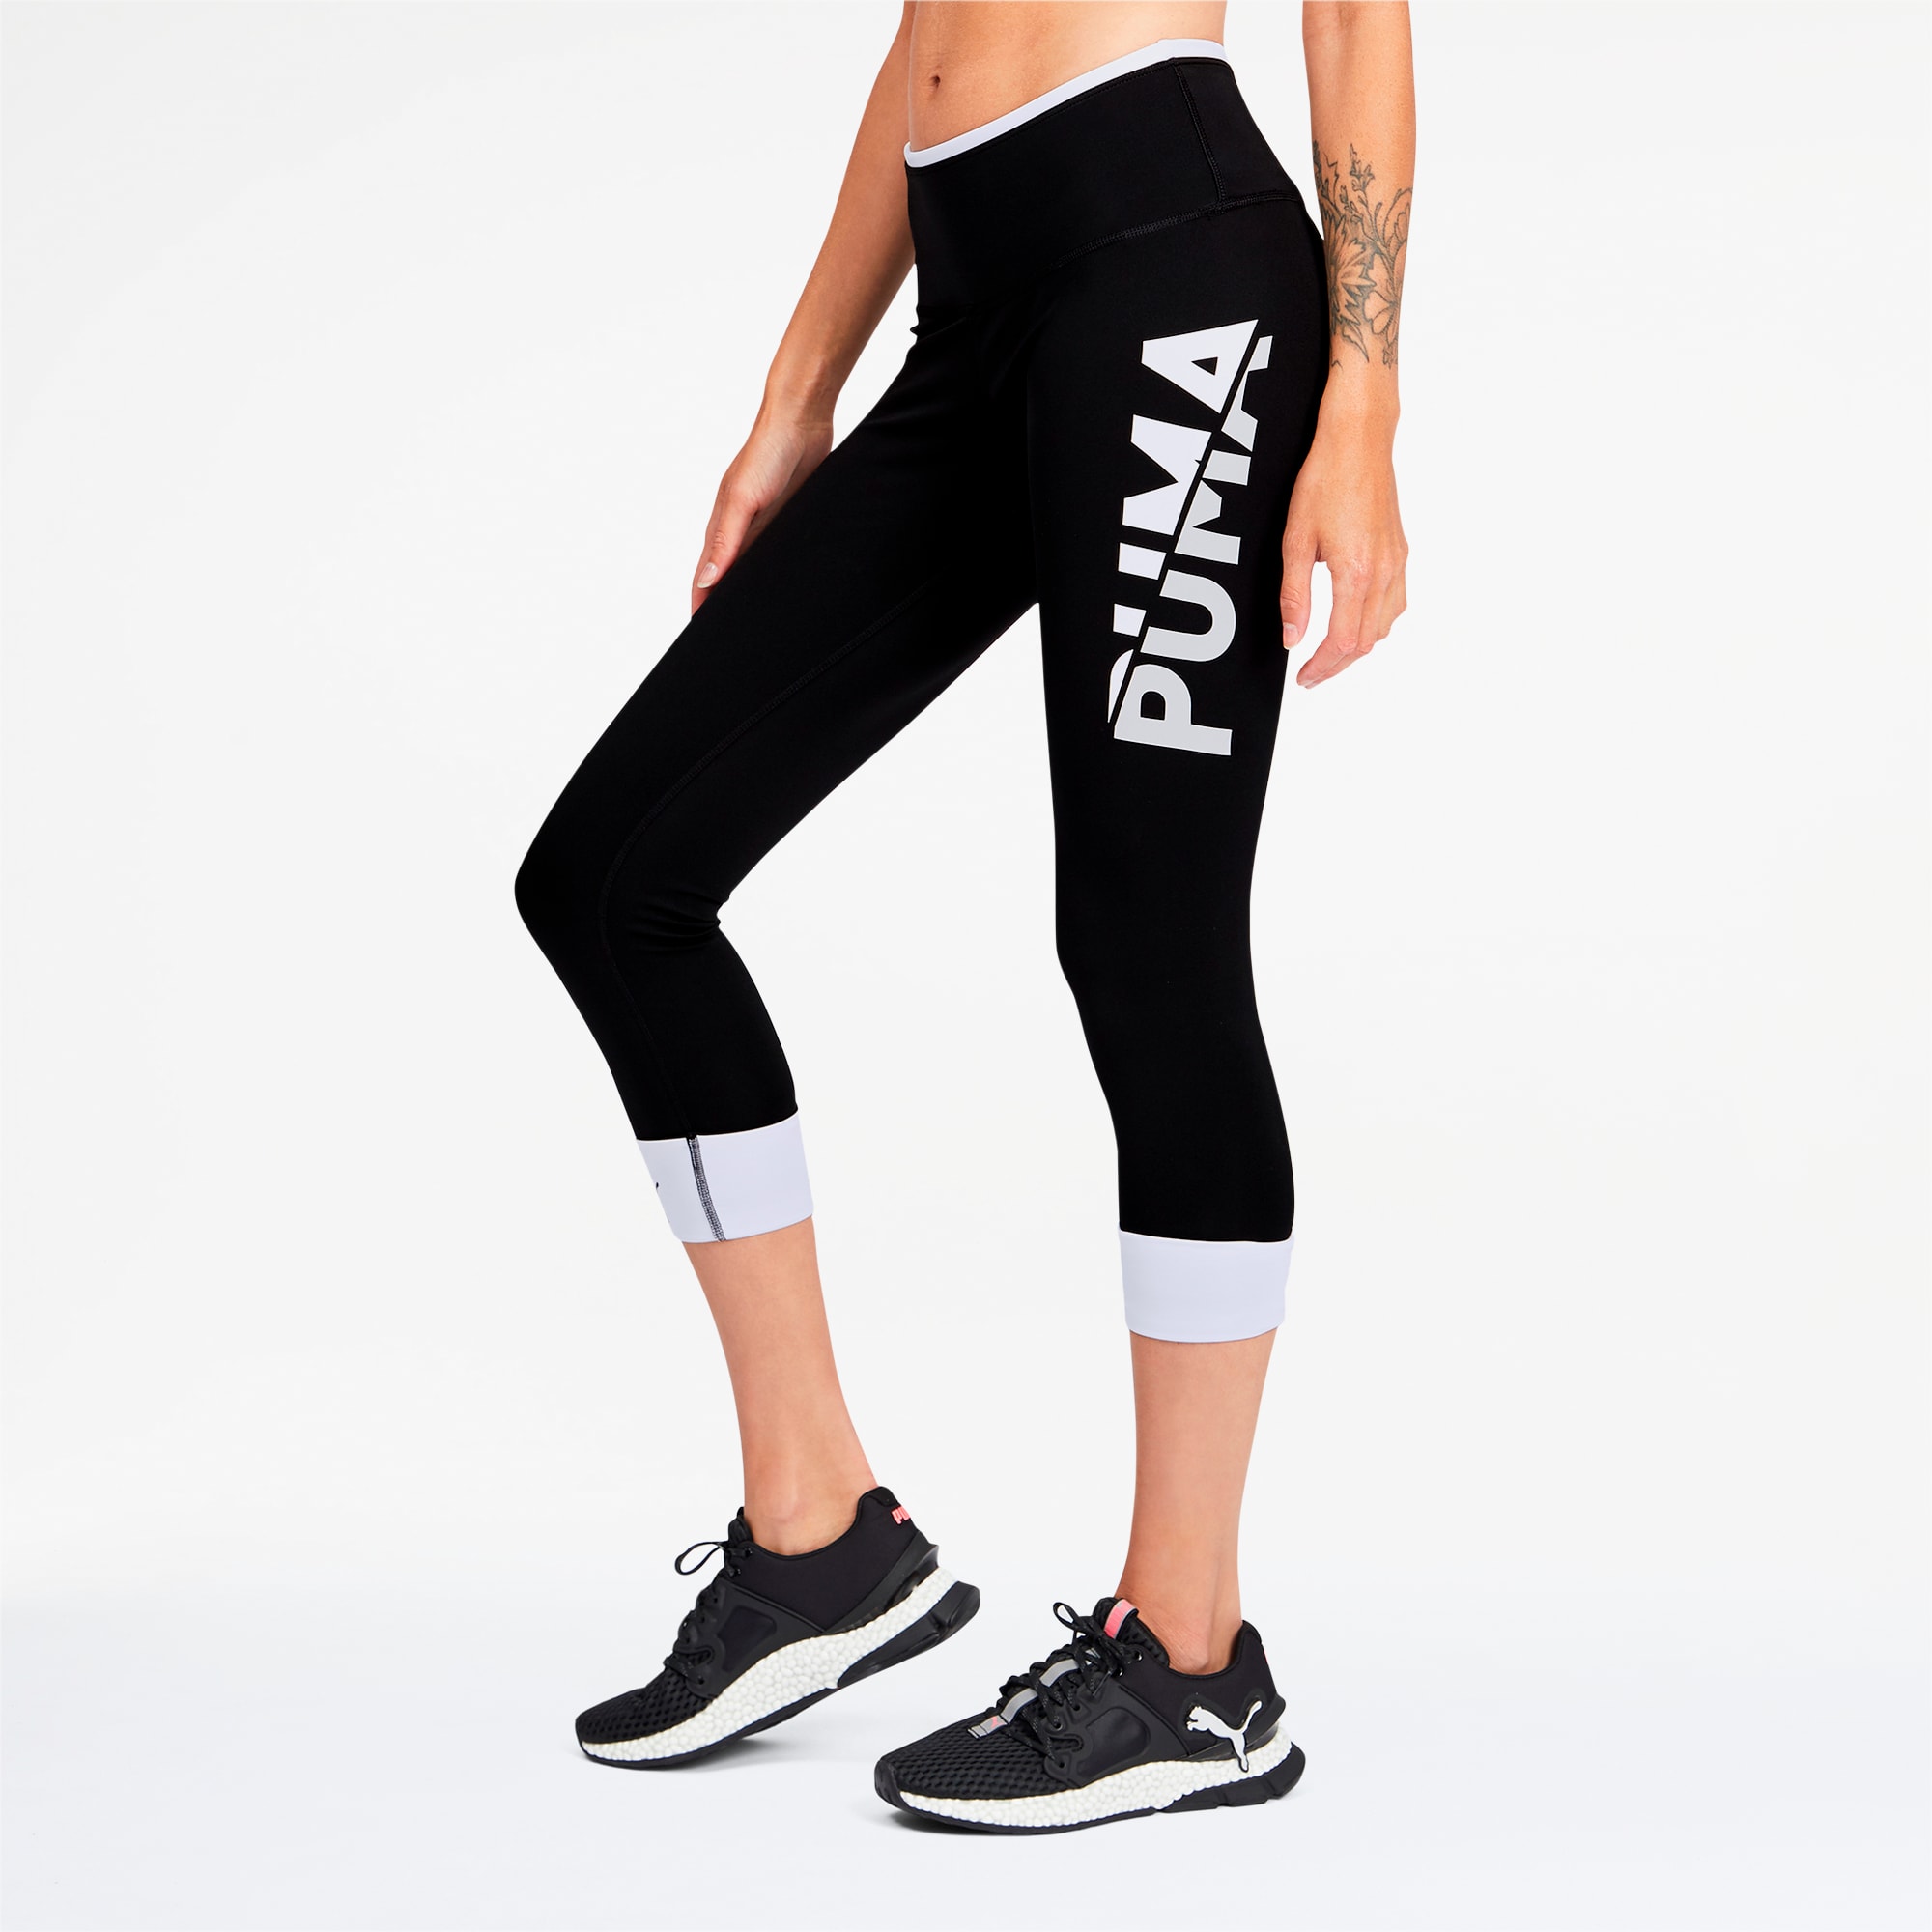 puma black and white leggings